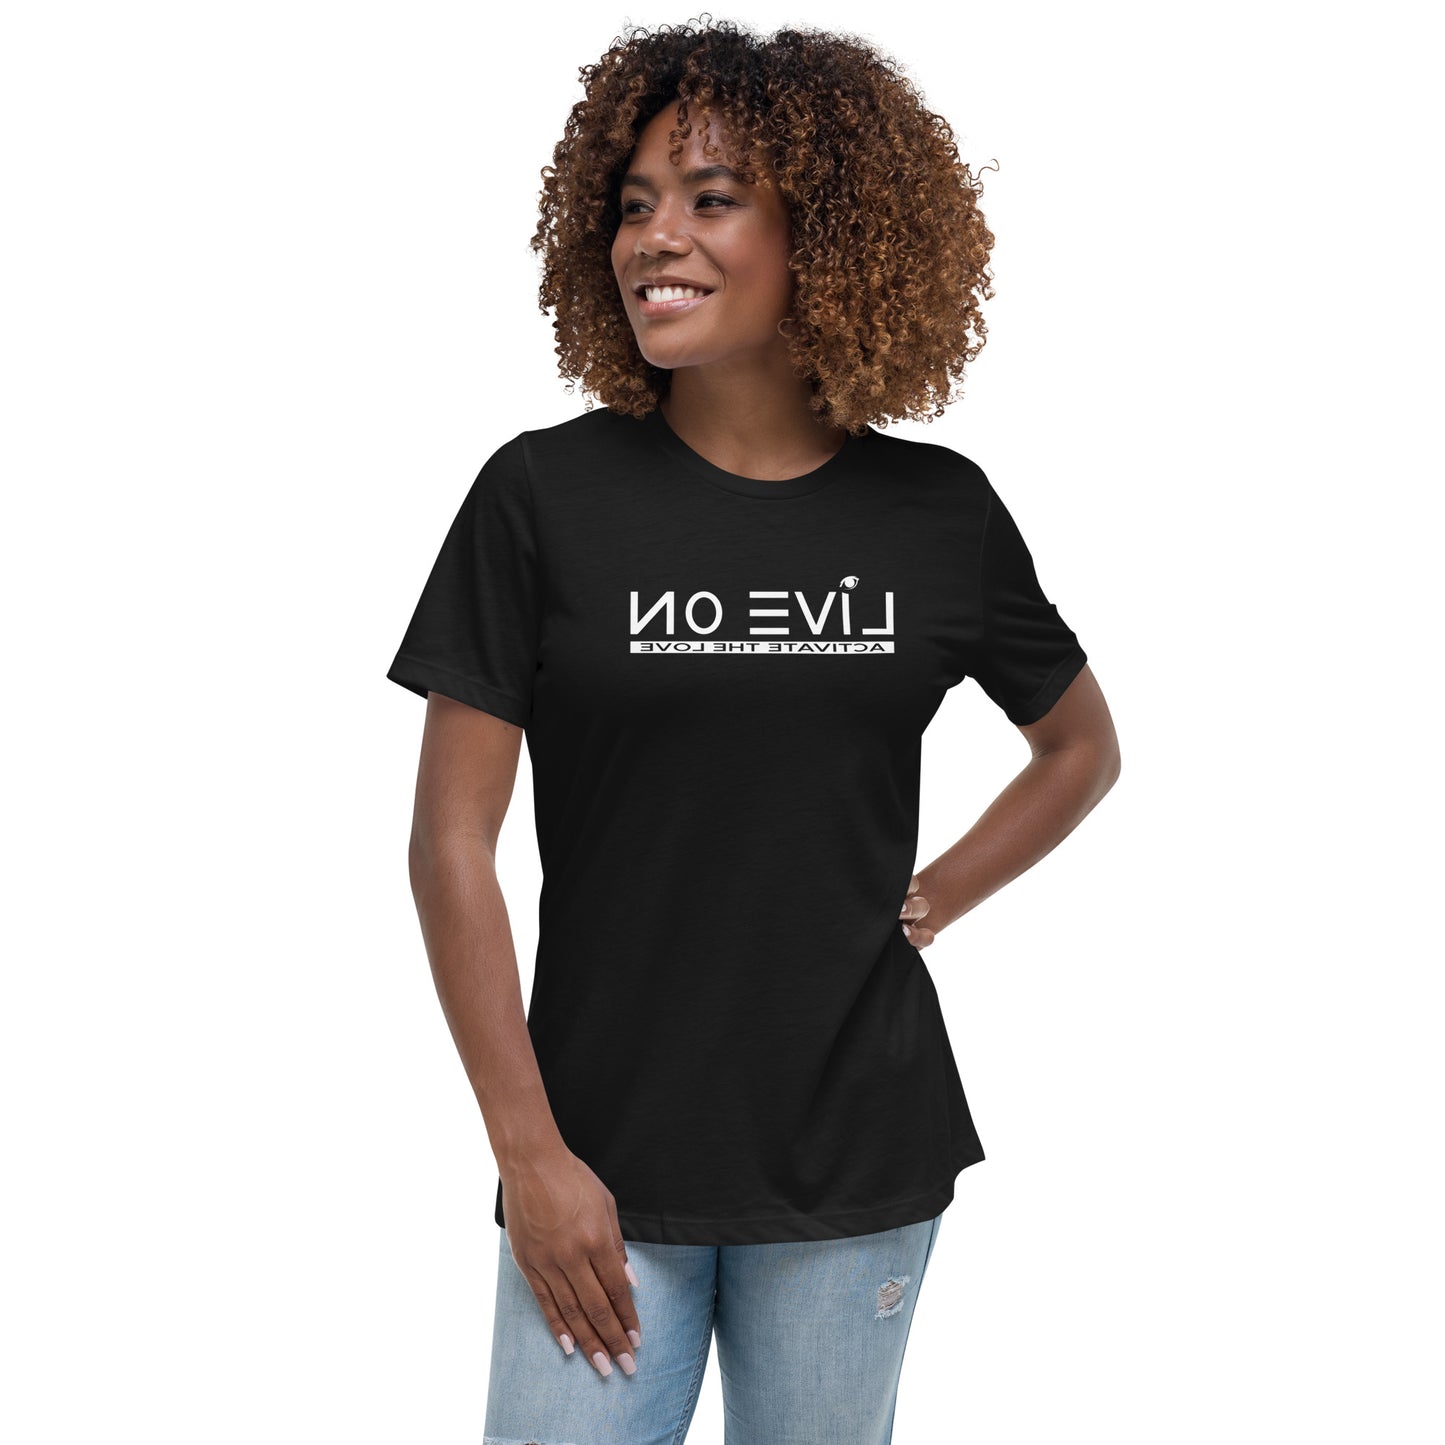 No Evil Women's Relaxed T-Shirt